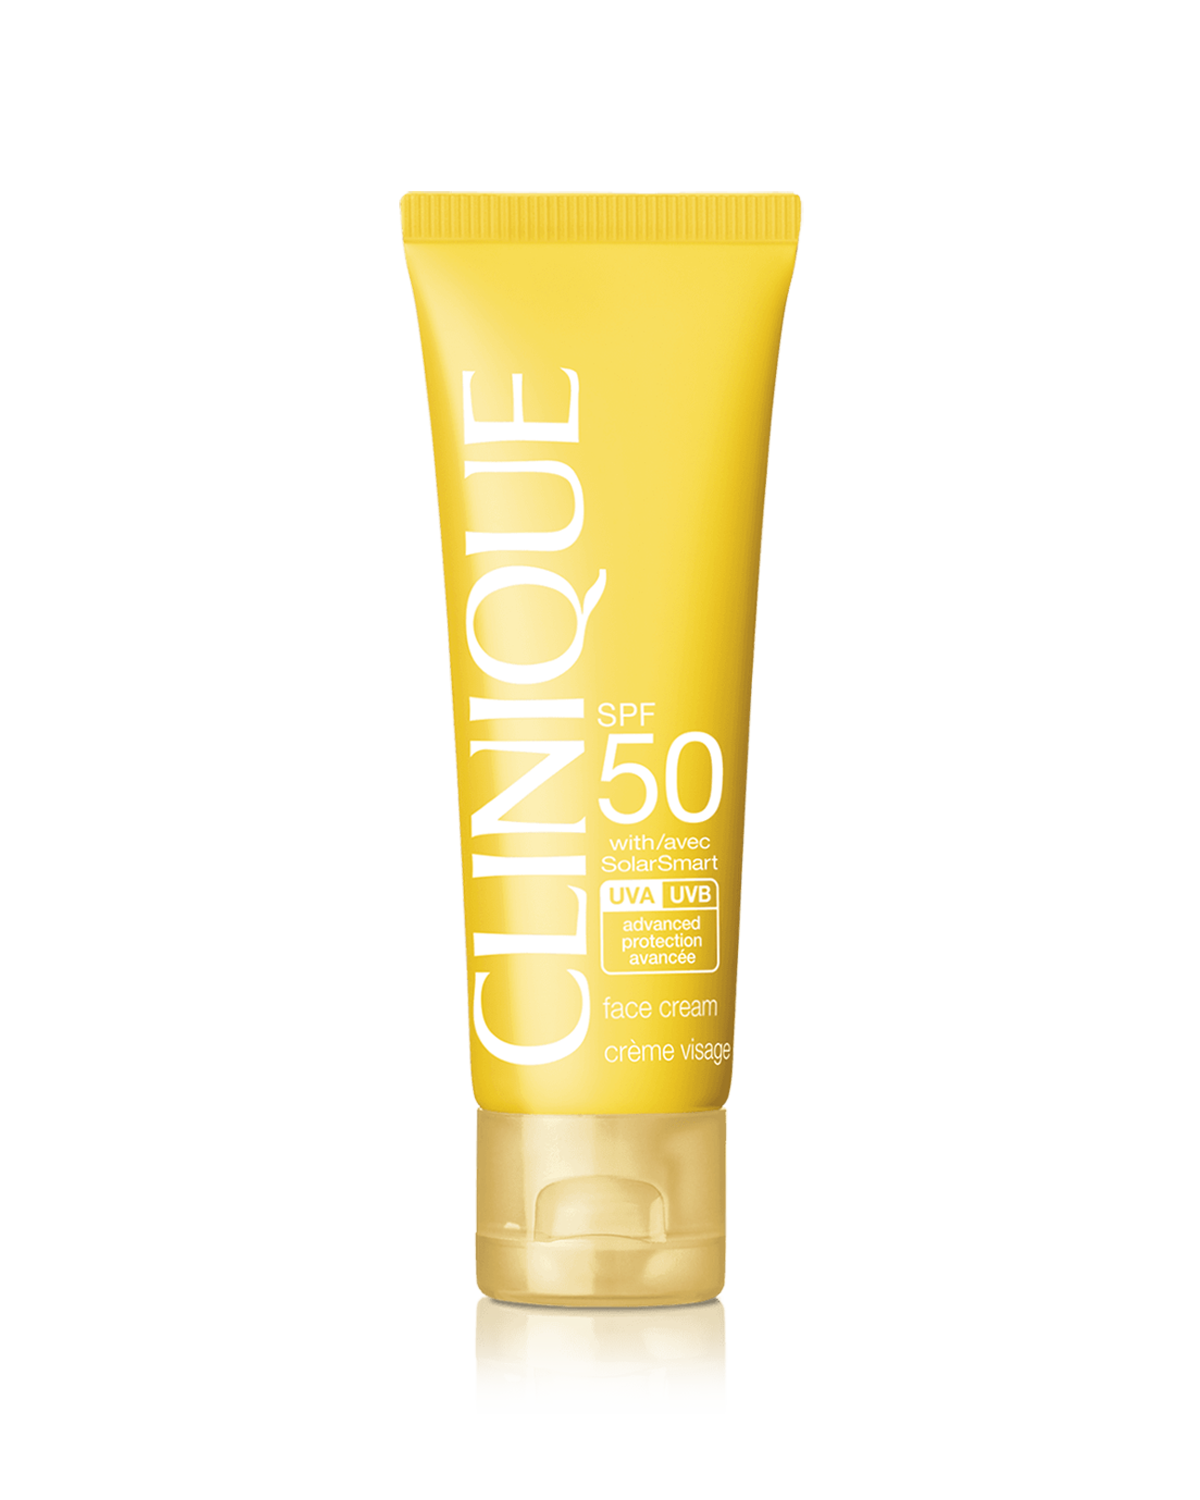 Clinique Sun Broad Spectrum SPF 50 Sunscreen Face Cream